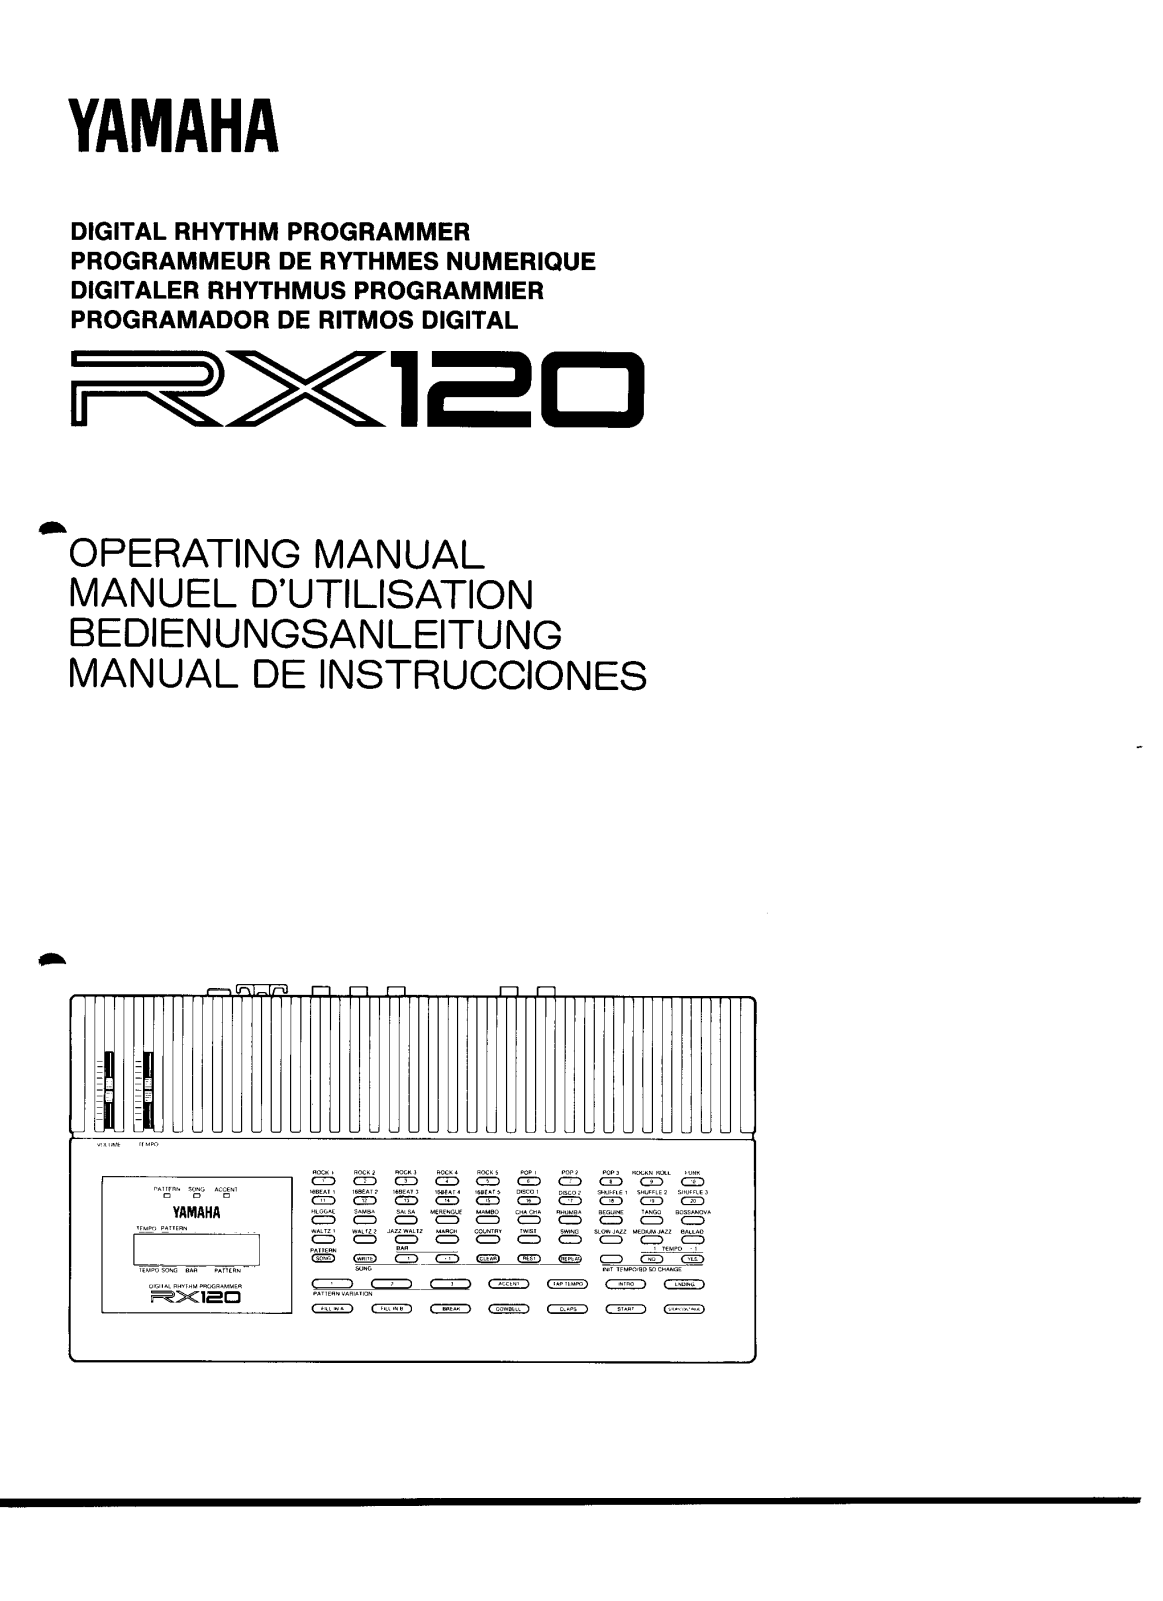 Yamaha RX-120E User Manual